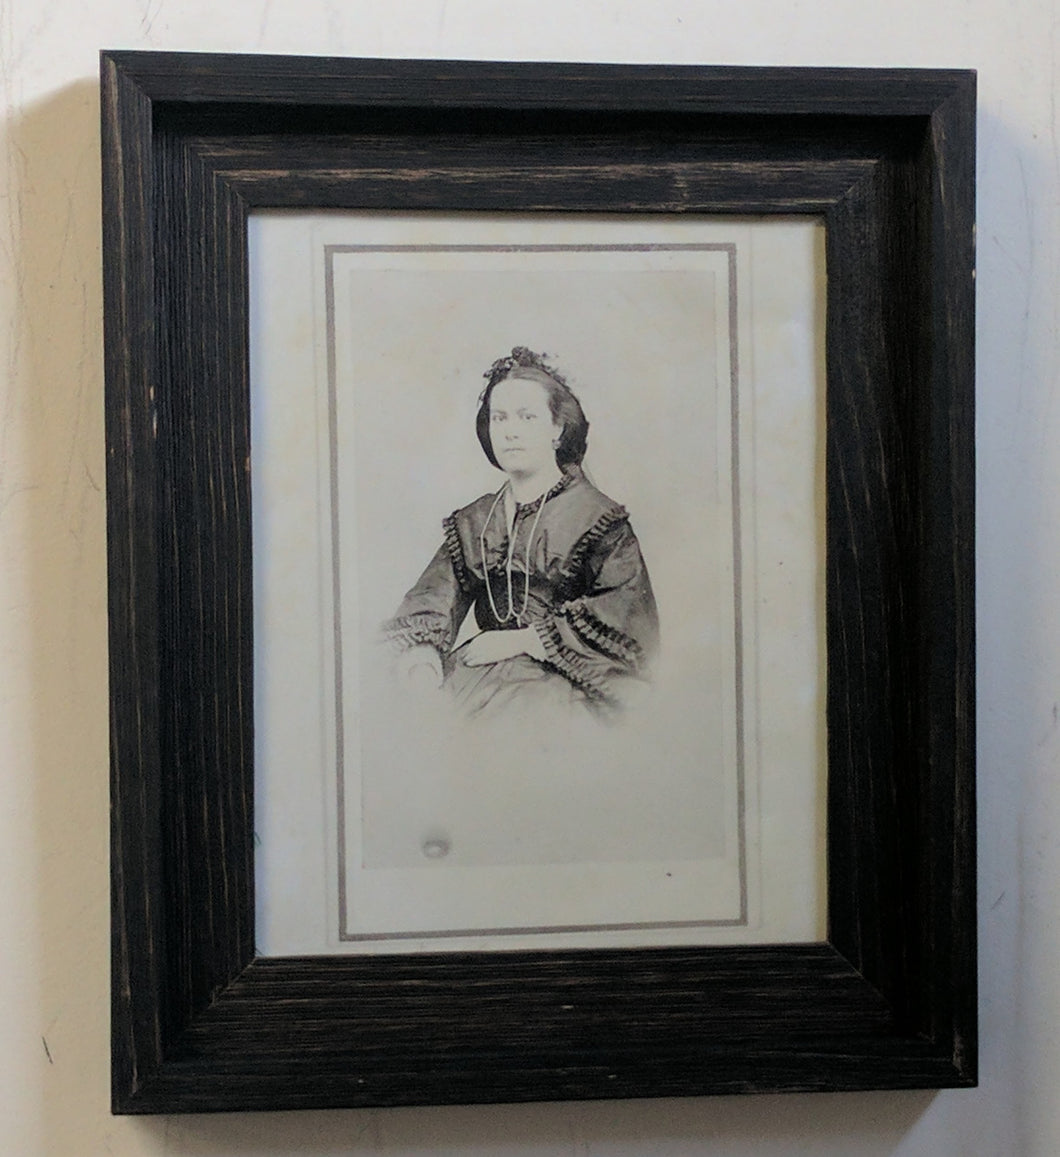 3070 Portrait of Woman Victorian Era Black and White